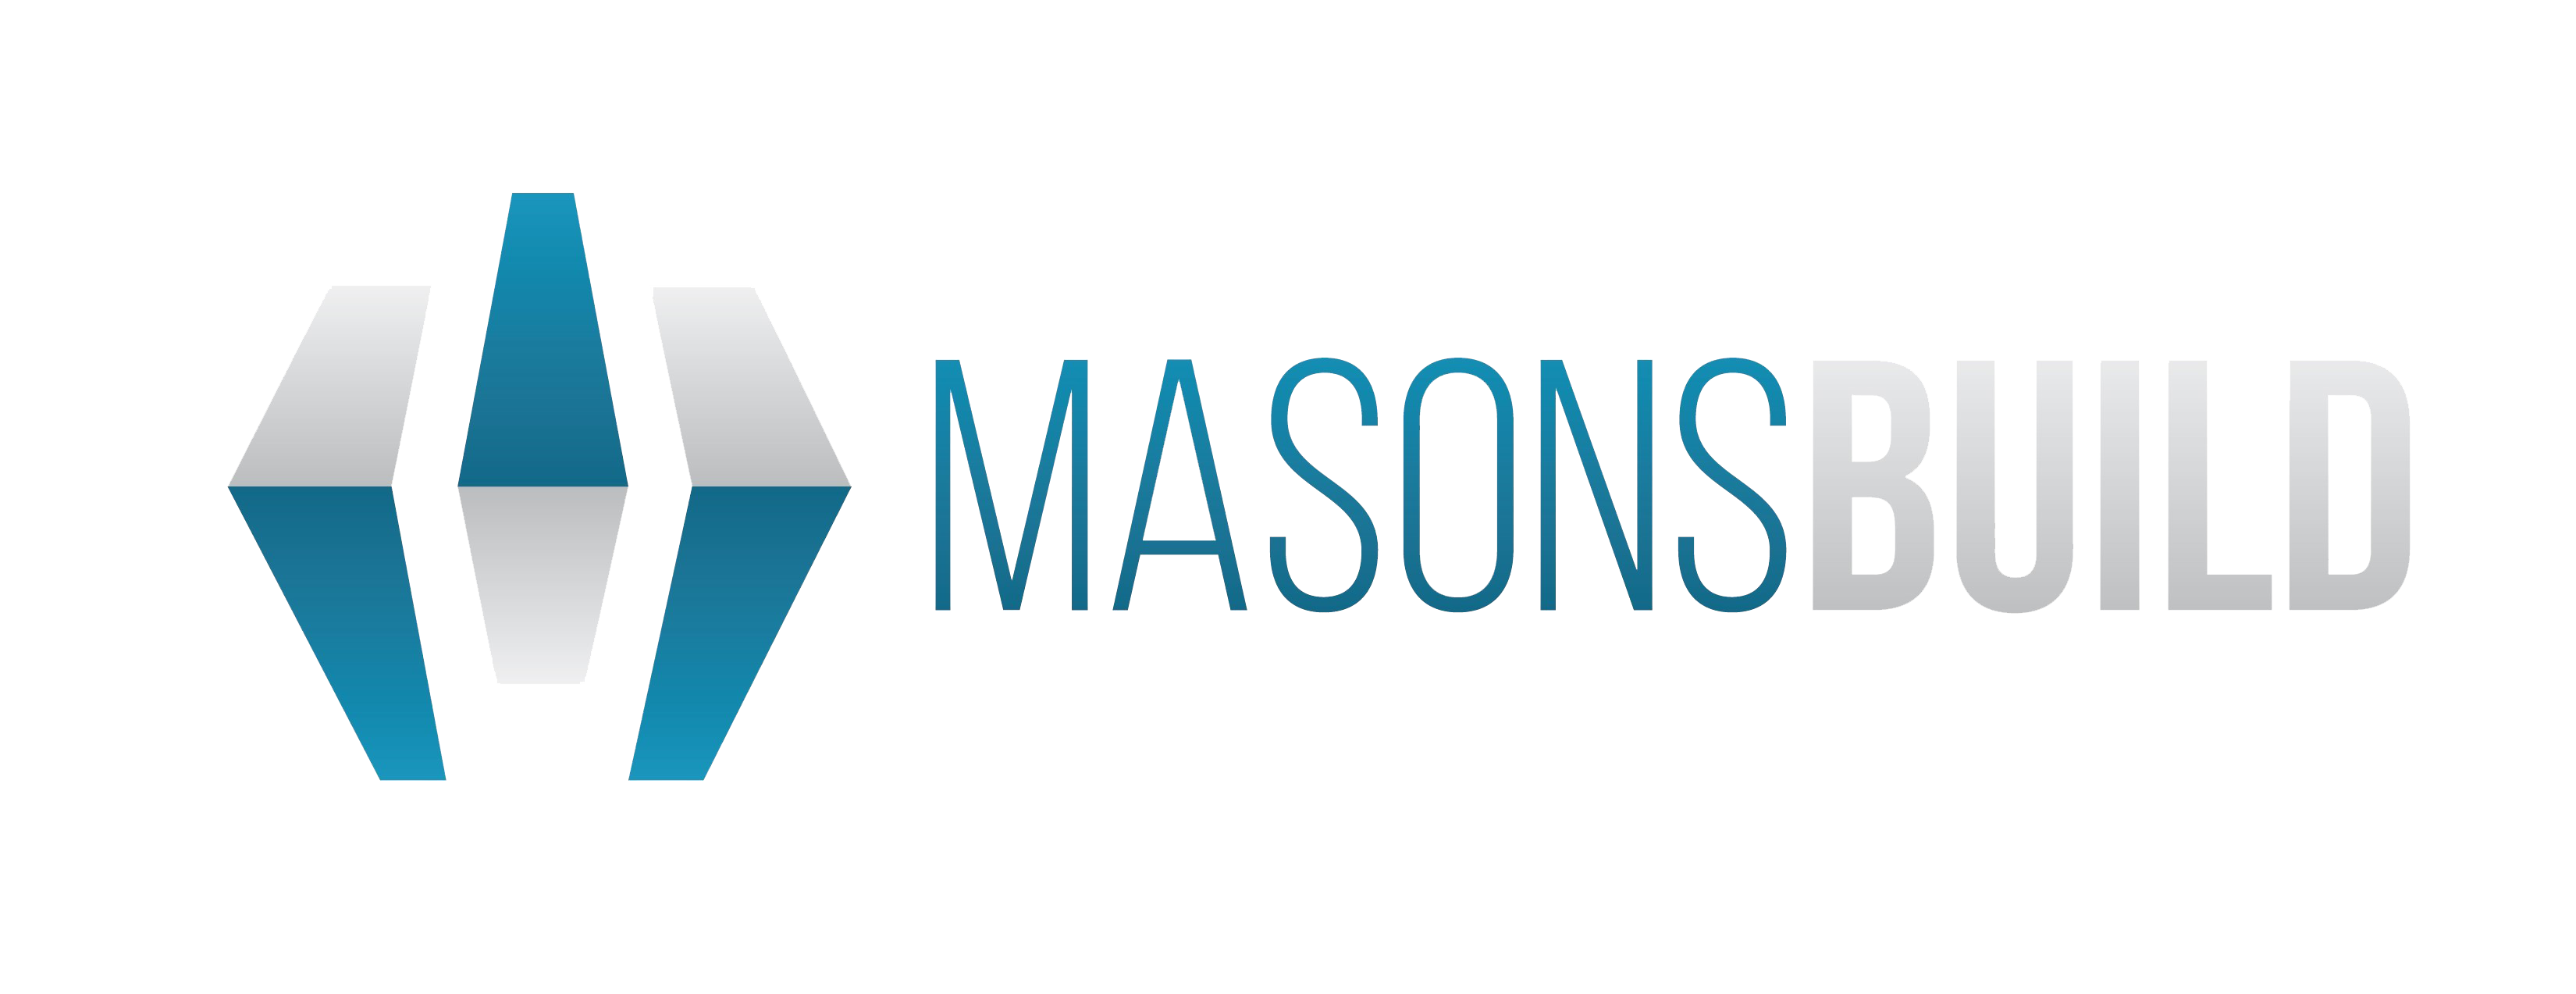 Masons Build